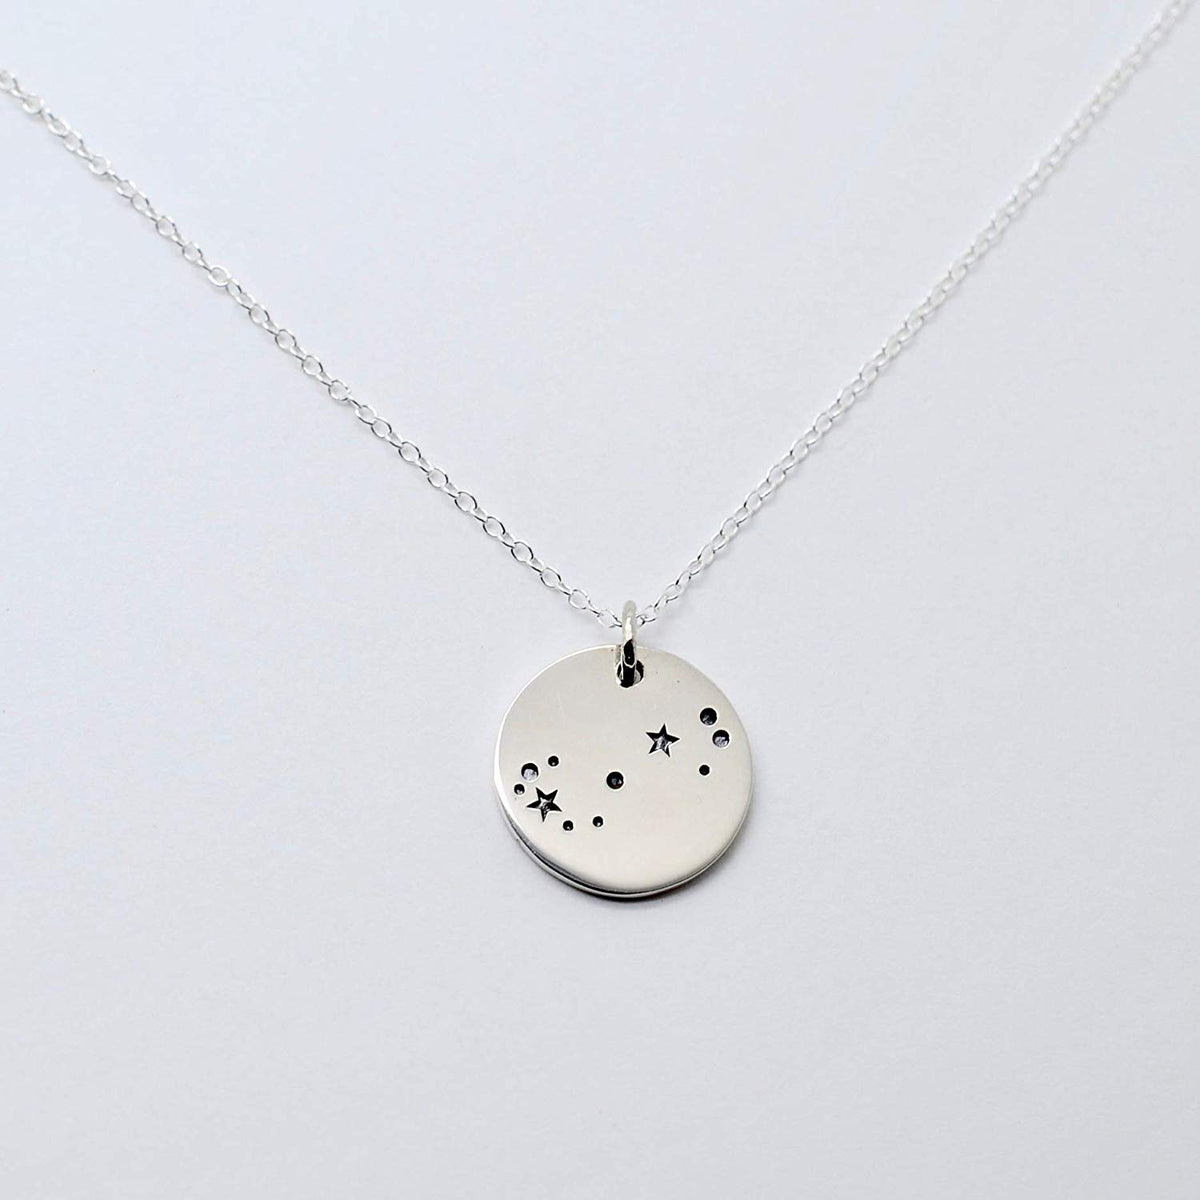 Scorpio Zodiac Sign Sterling Silver Constellation Necklace - Love It Personalized